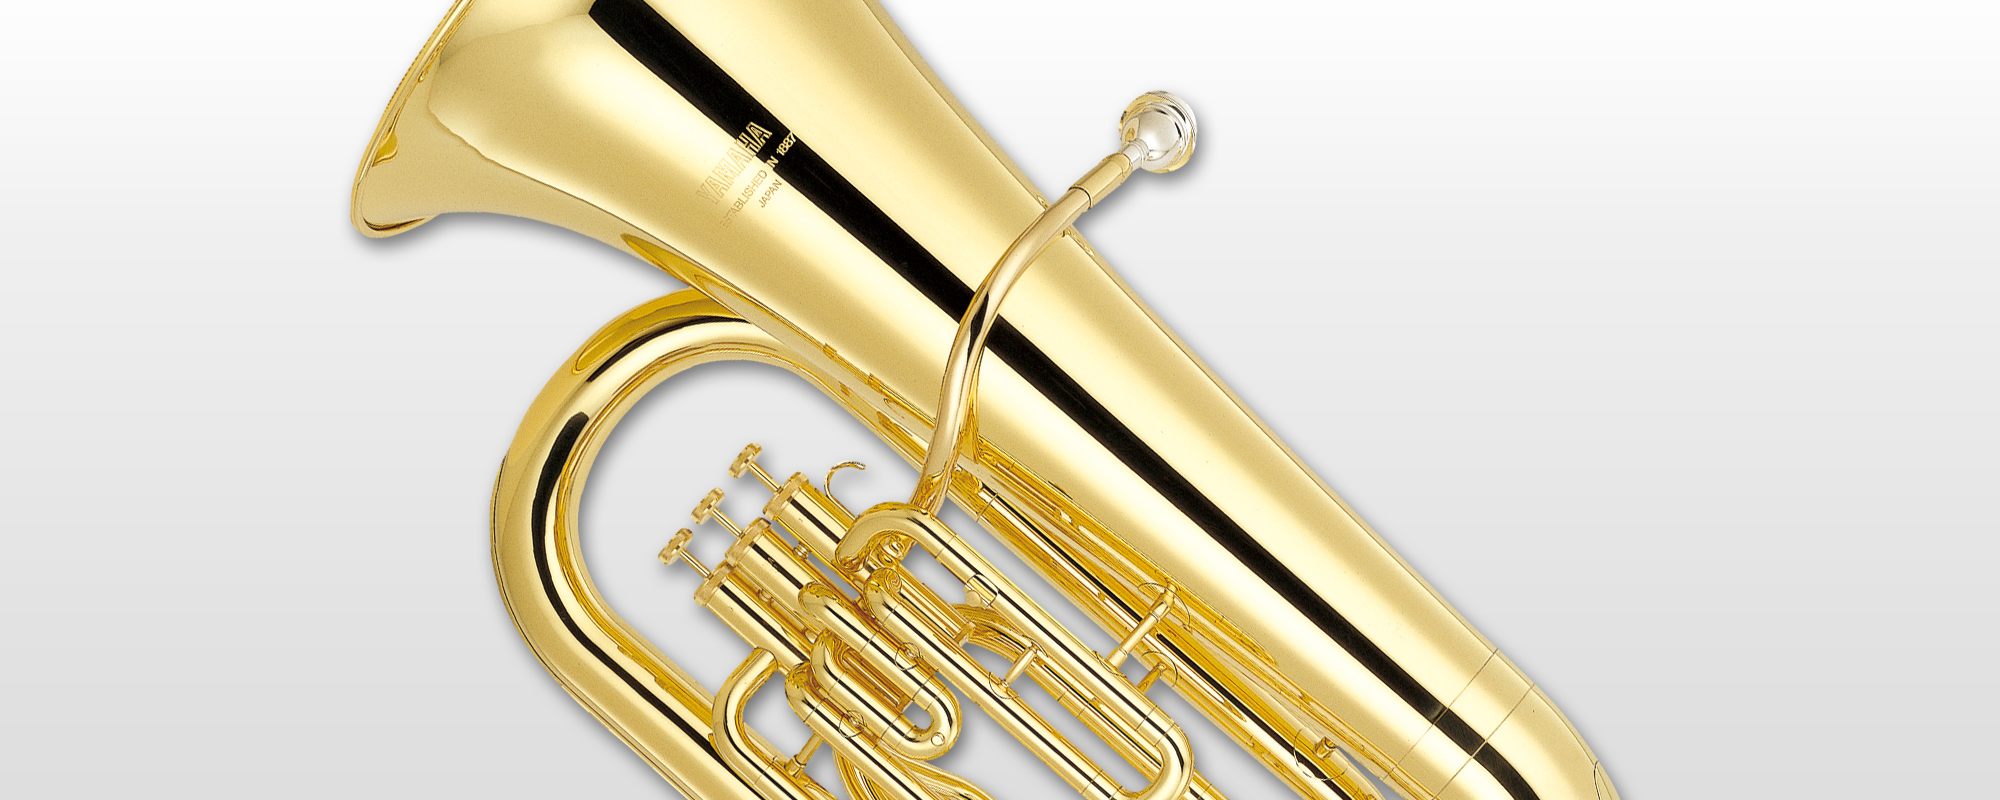 YEB-201 - Overview - Tubas - Brass & Woodwinds - Musical 